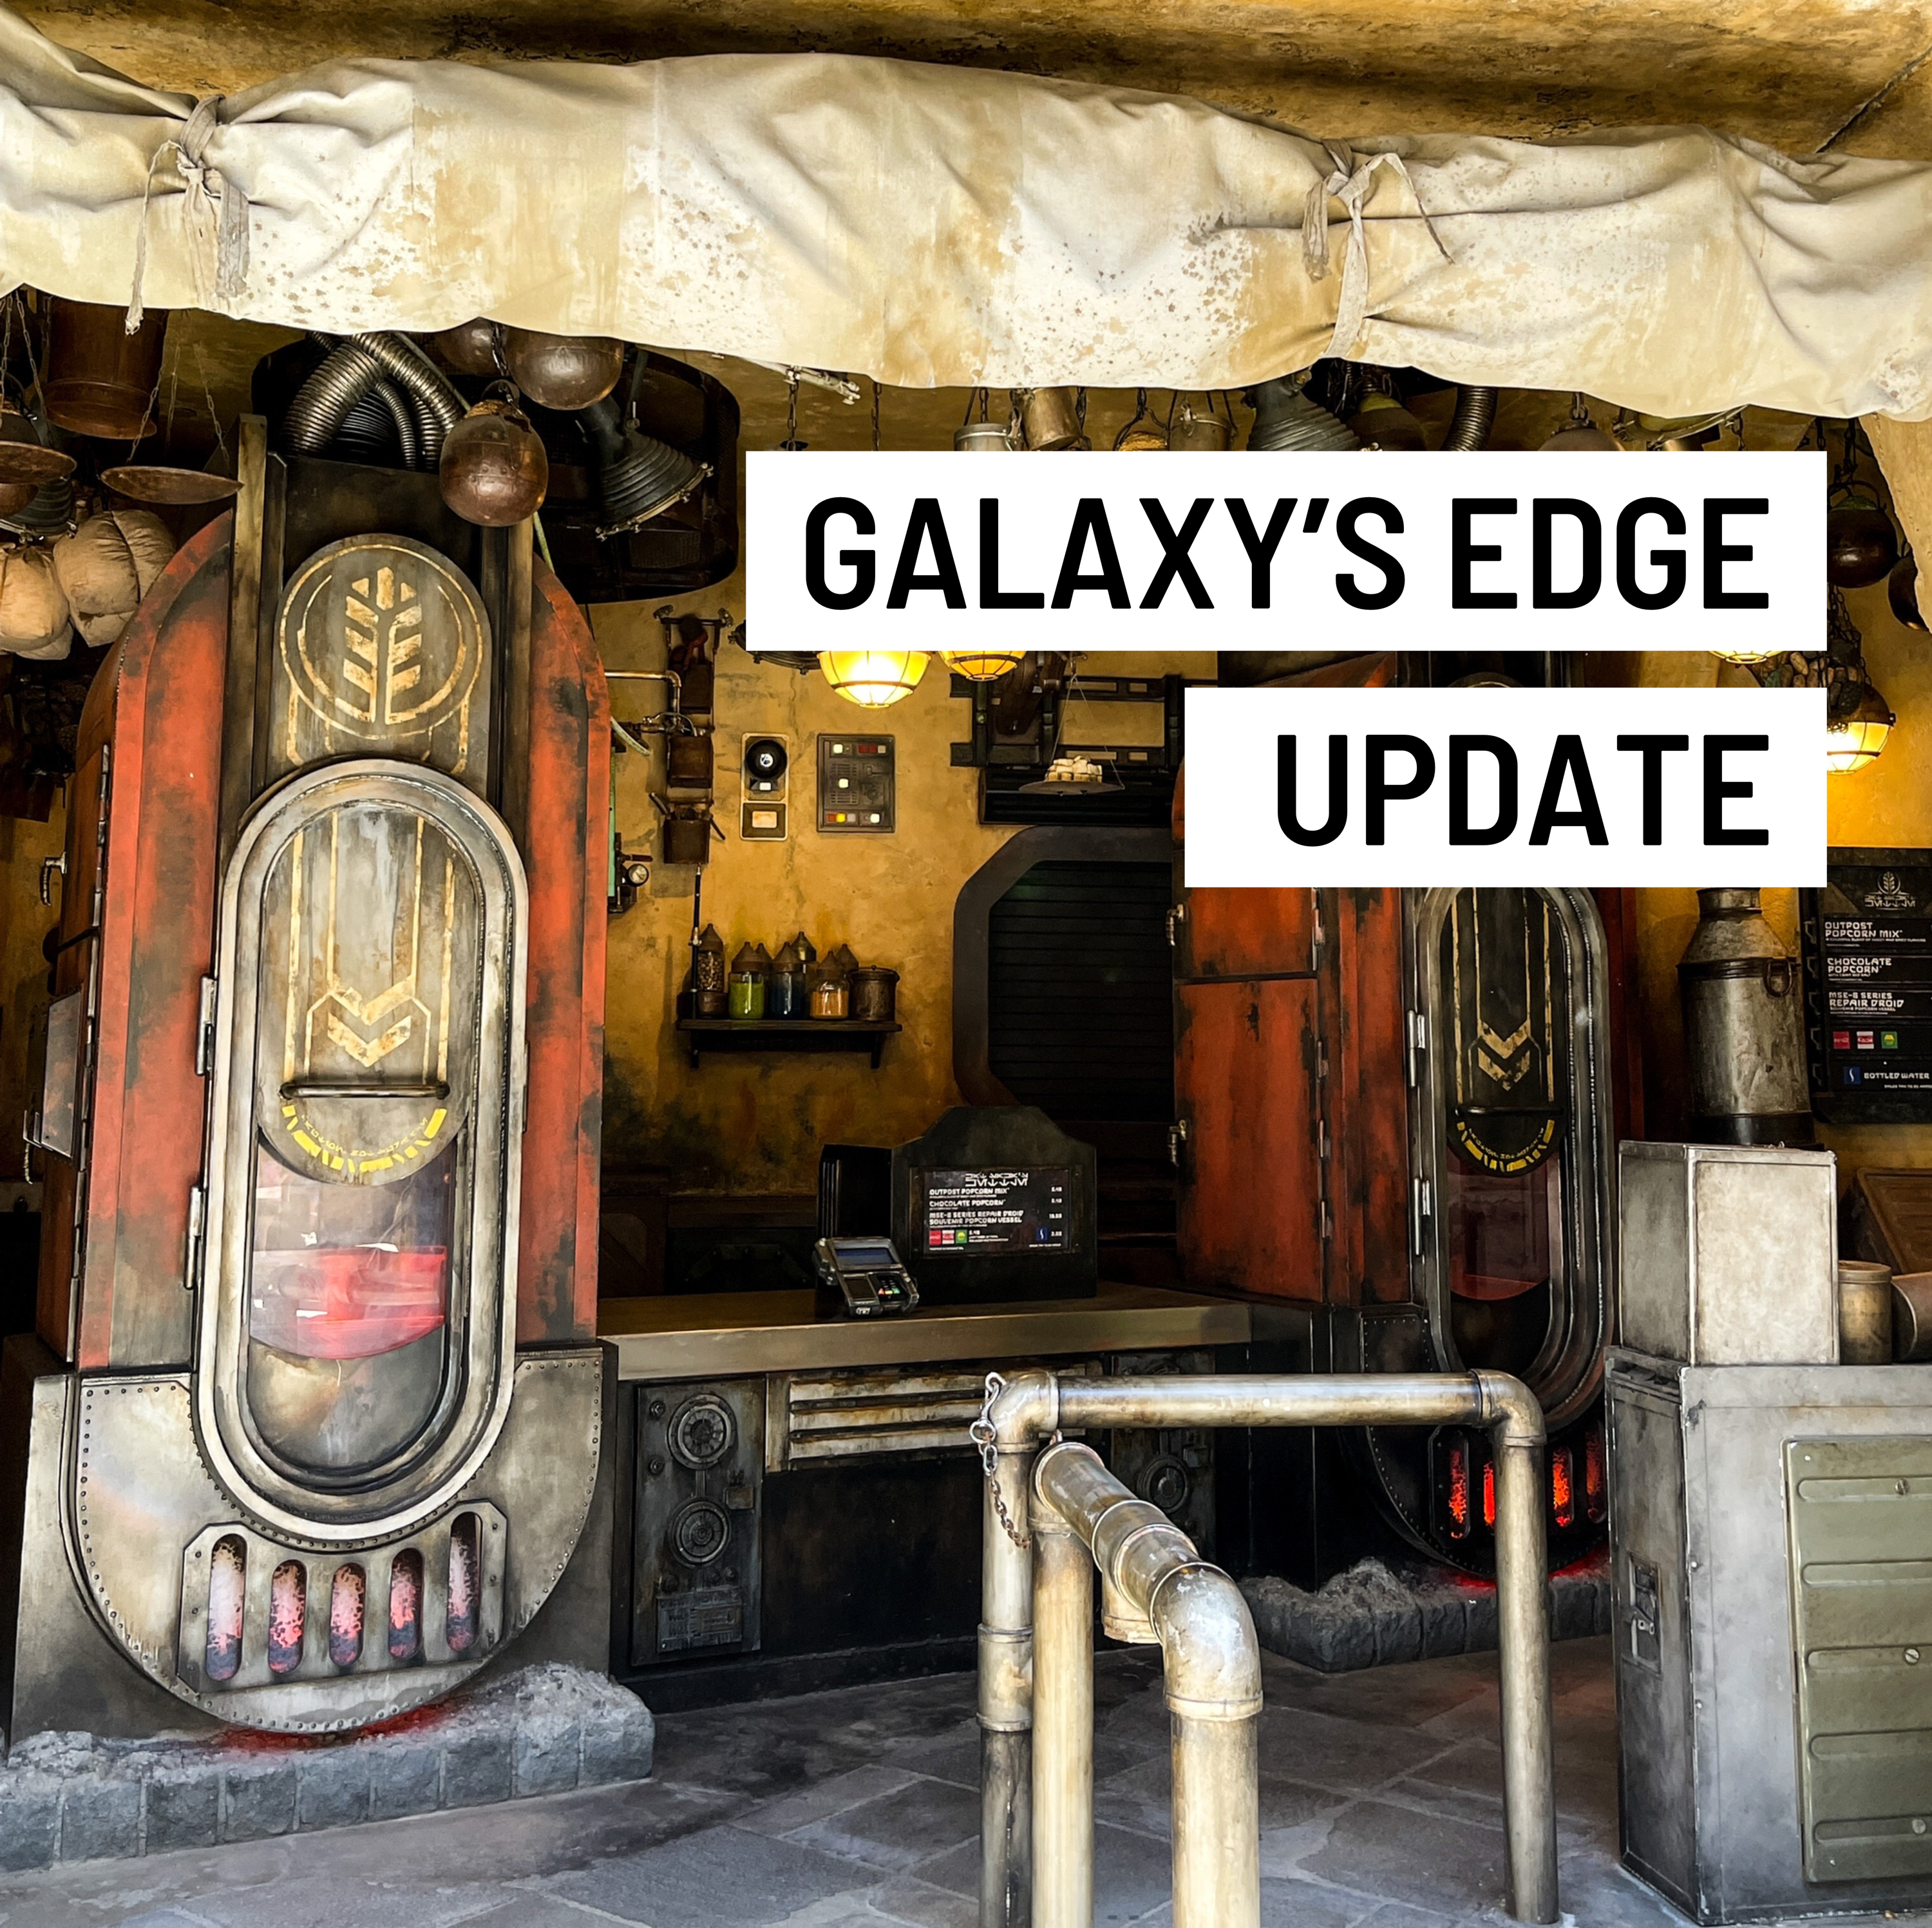 Star Wars: Galaxy's Edge Update - The Return of the Darksaber, New Popcorn Flavor & Scavenger Hunt | Anakin and His Angel